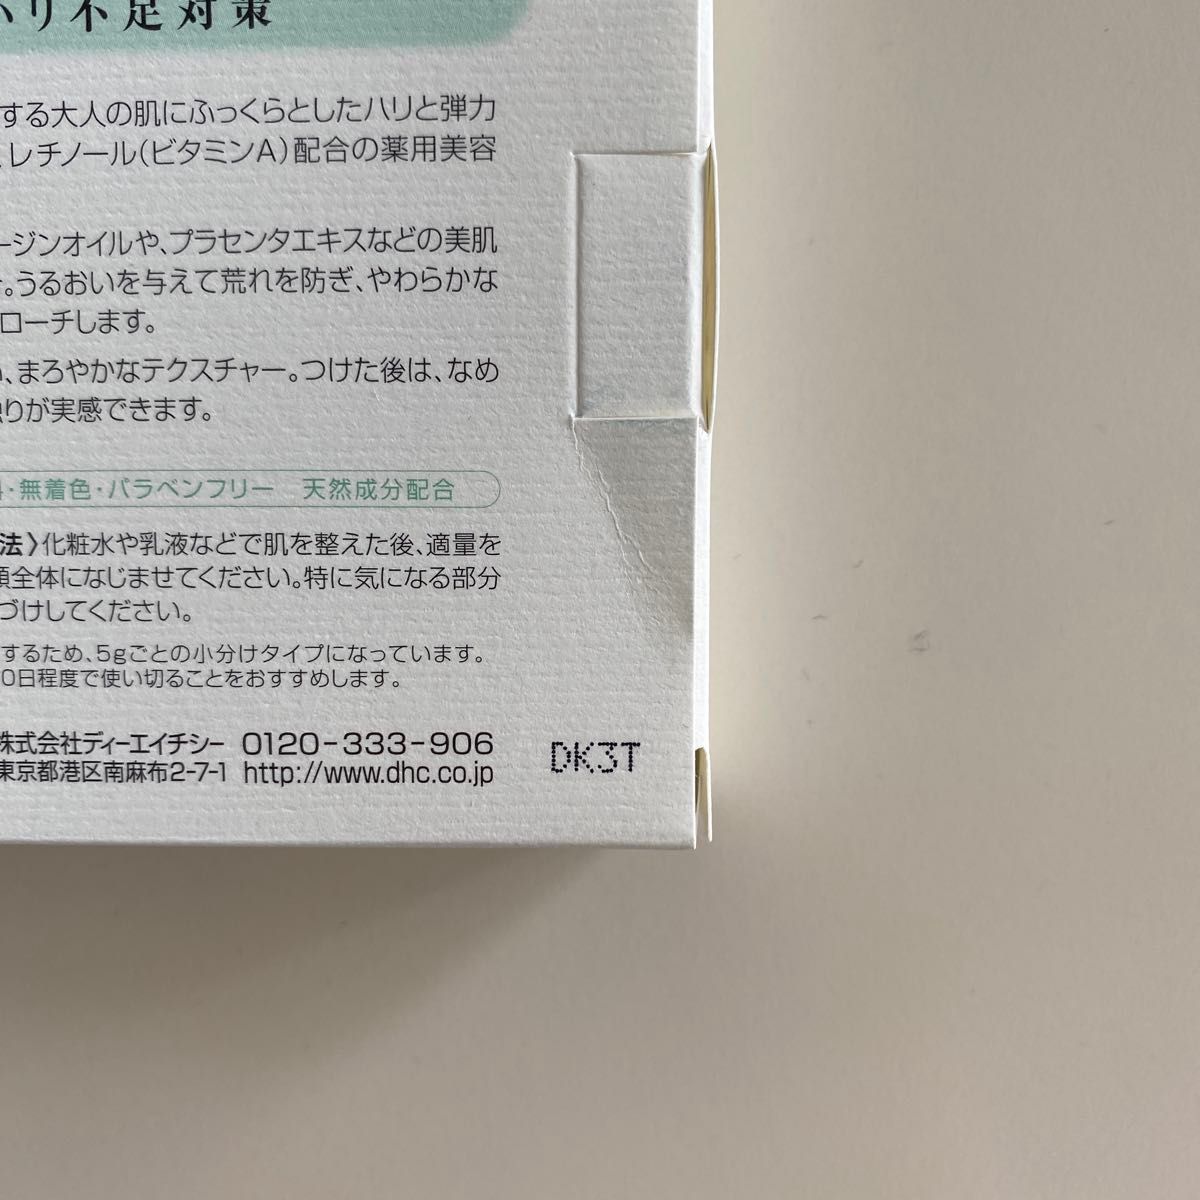 DHC薬用レチノAエッセンス 5g×3本（医薬部外品）